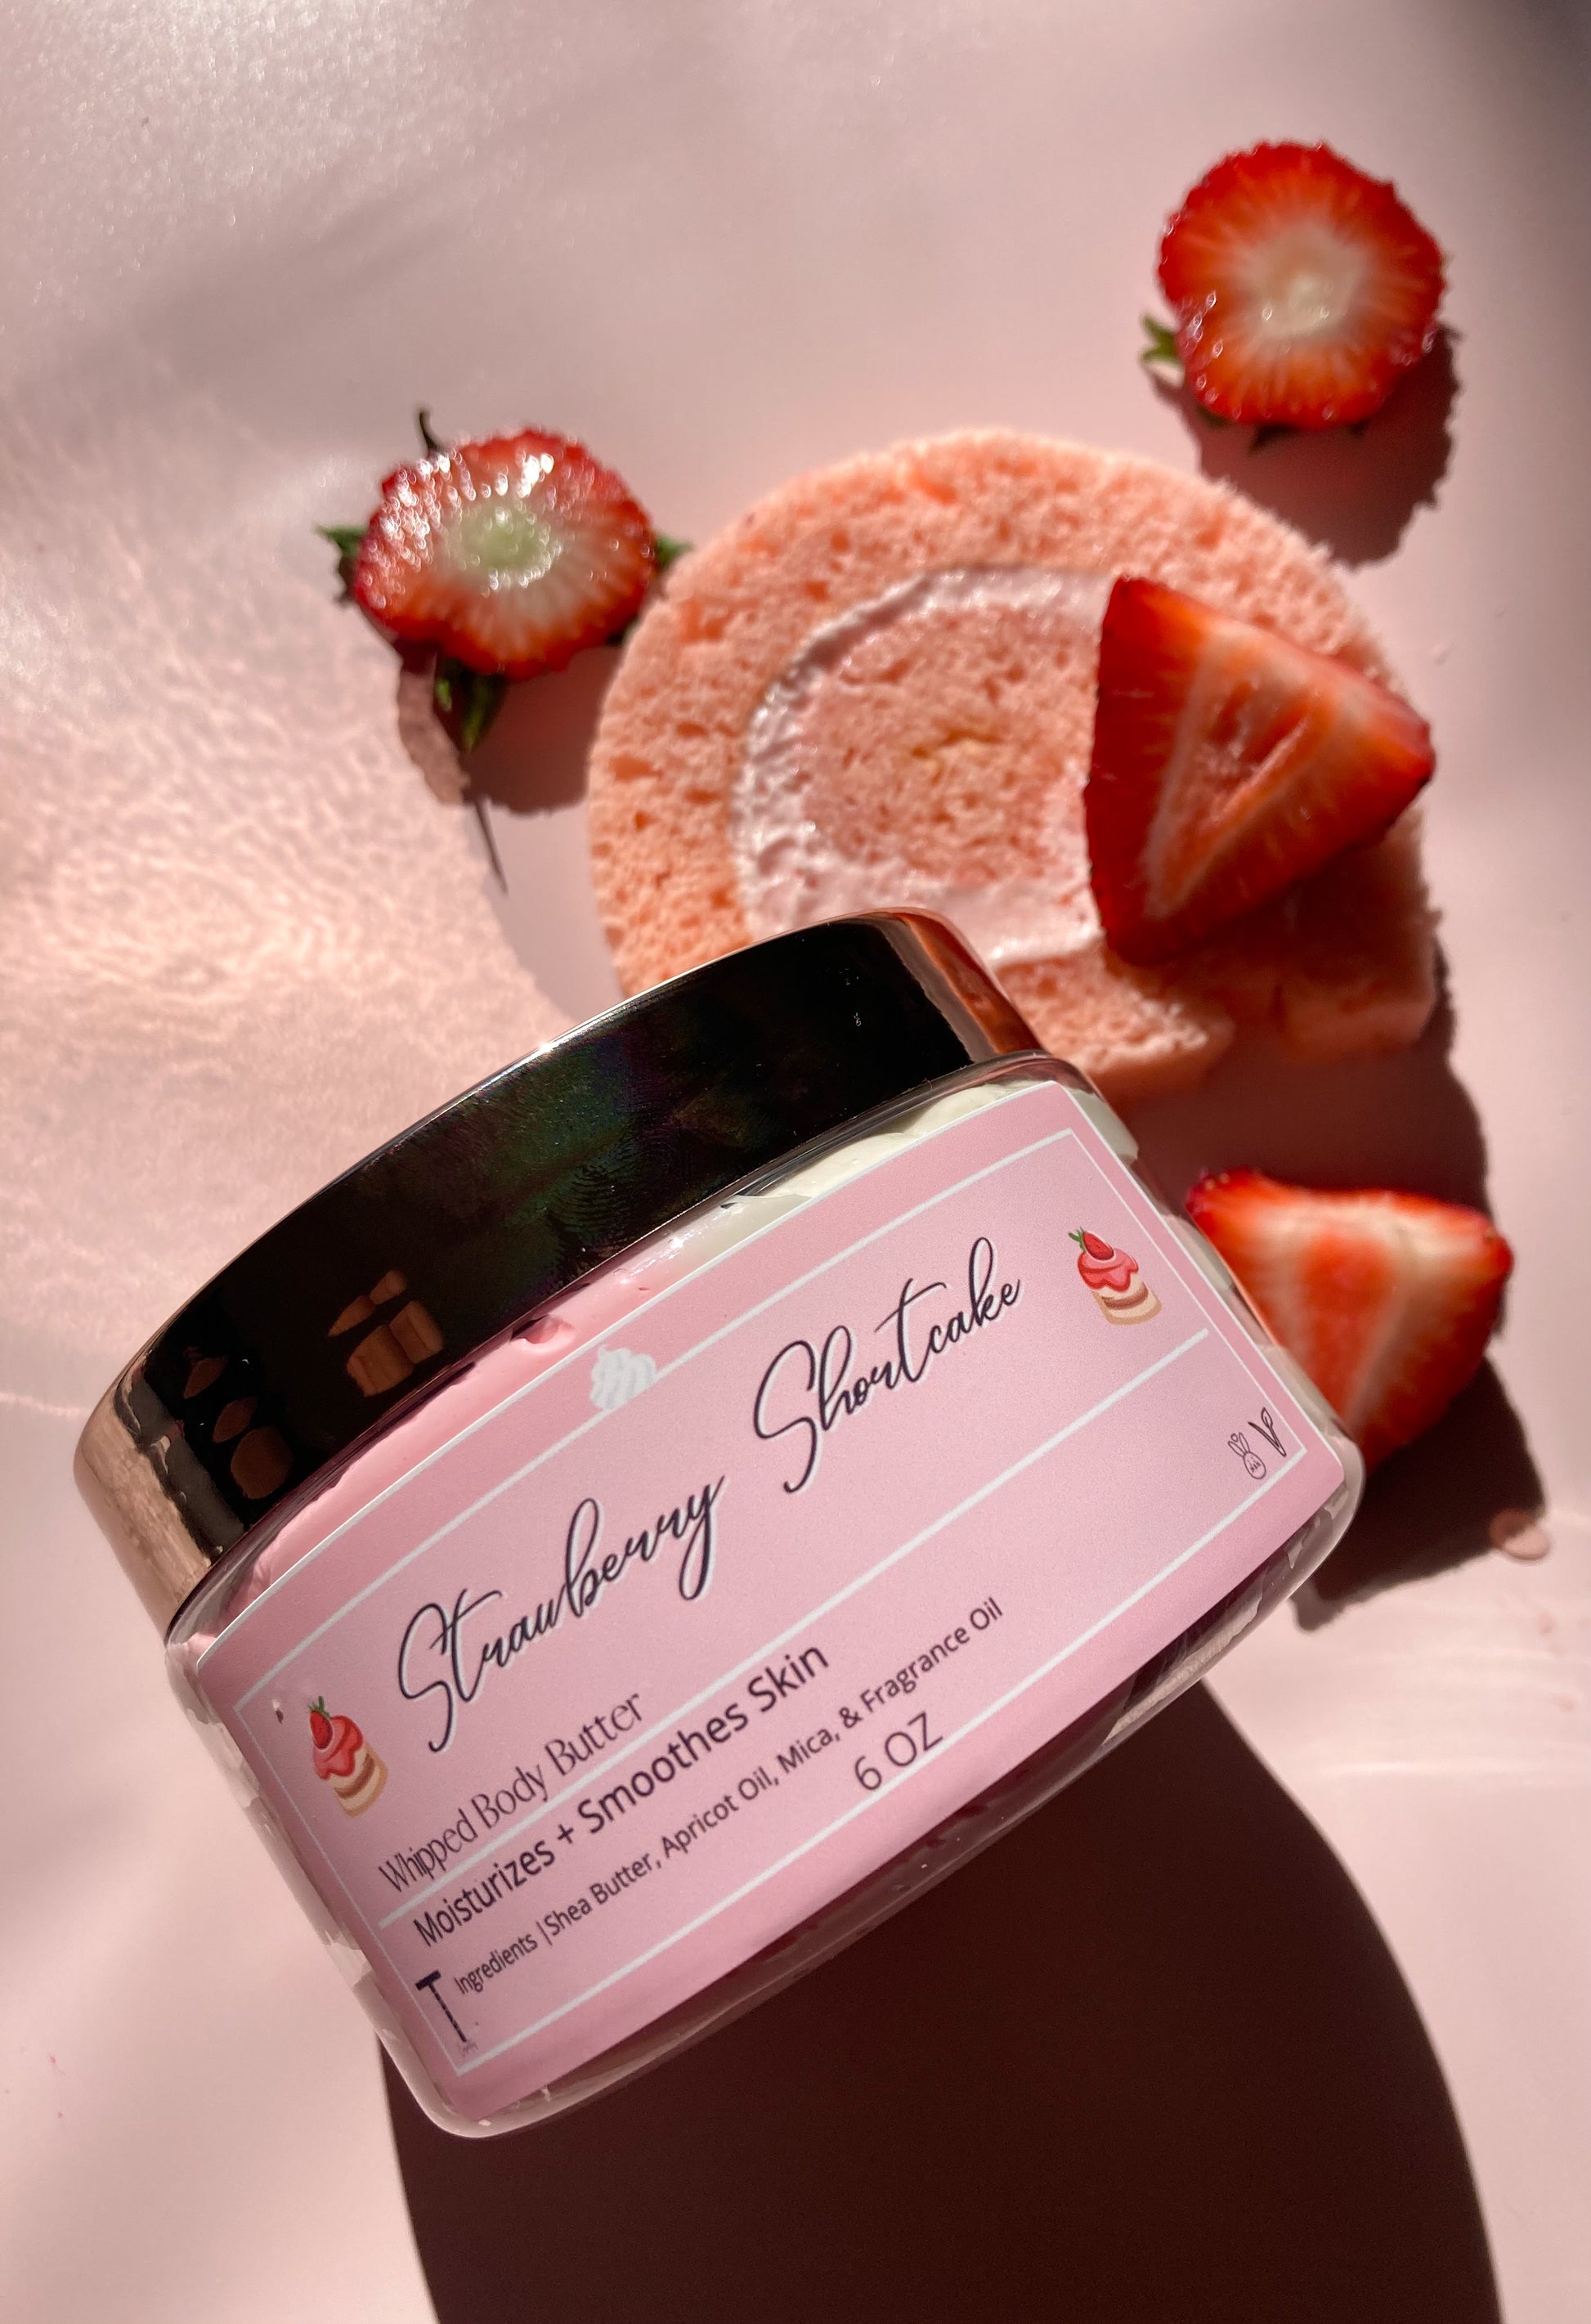 Strawberry Shortcake  6 OZ Whipped Body Butter – Trene Cosmetics